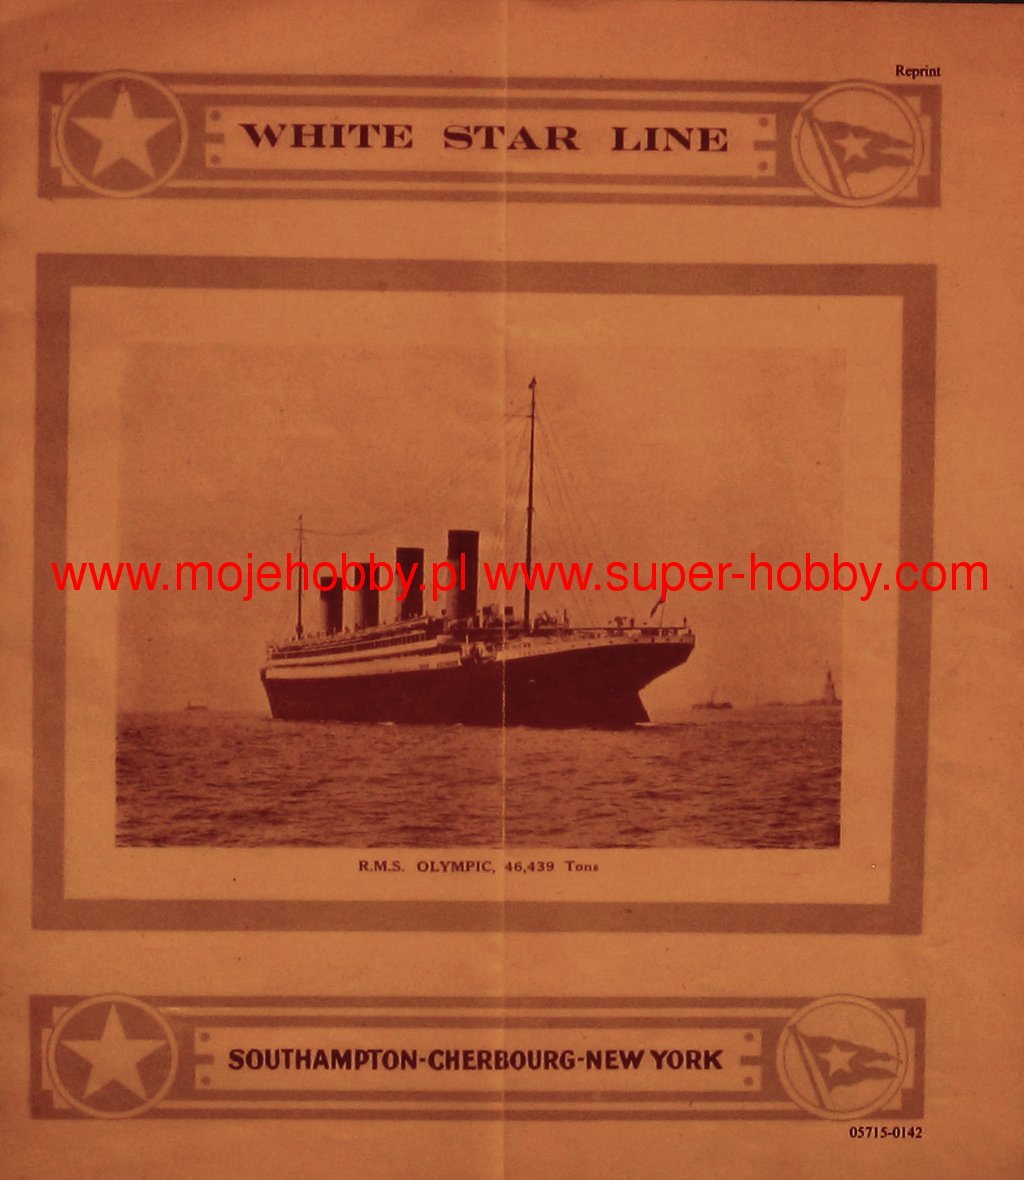 R.M.S. Titanic - 100th anniversary edition Revell 05715